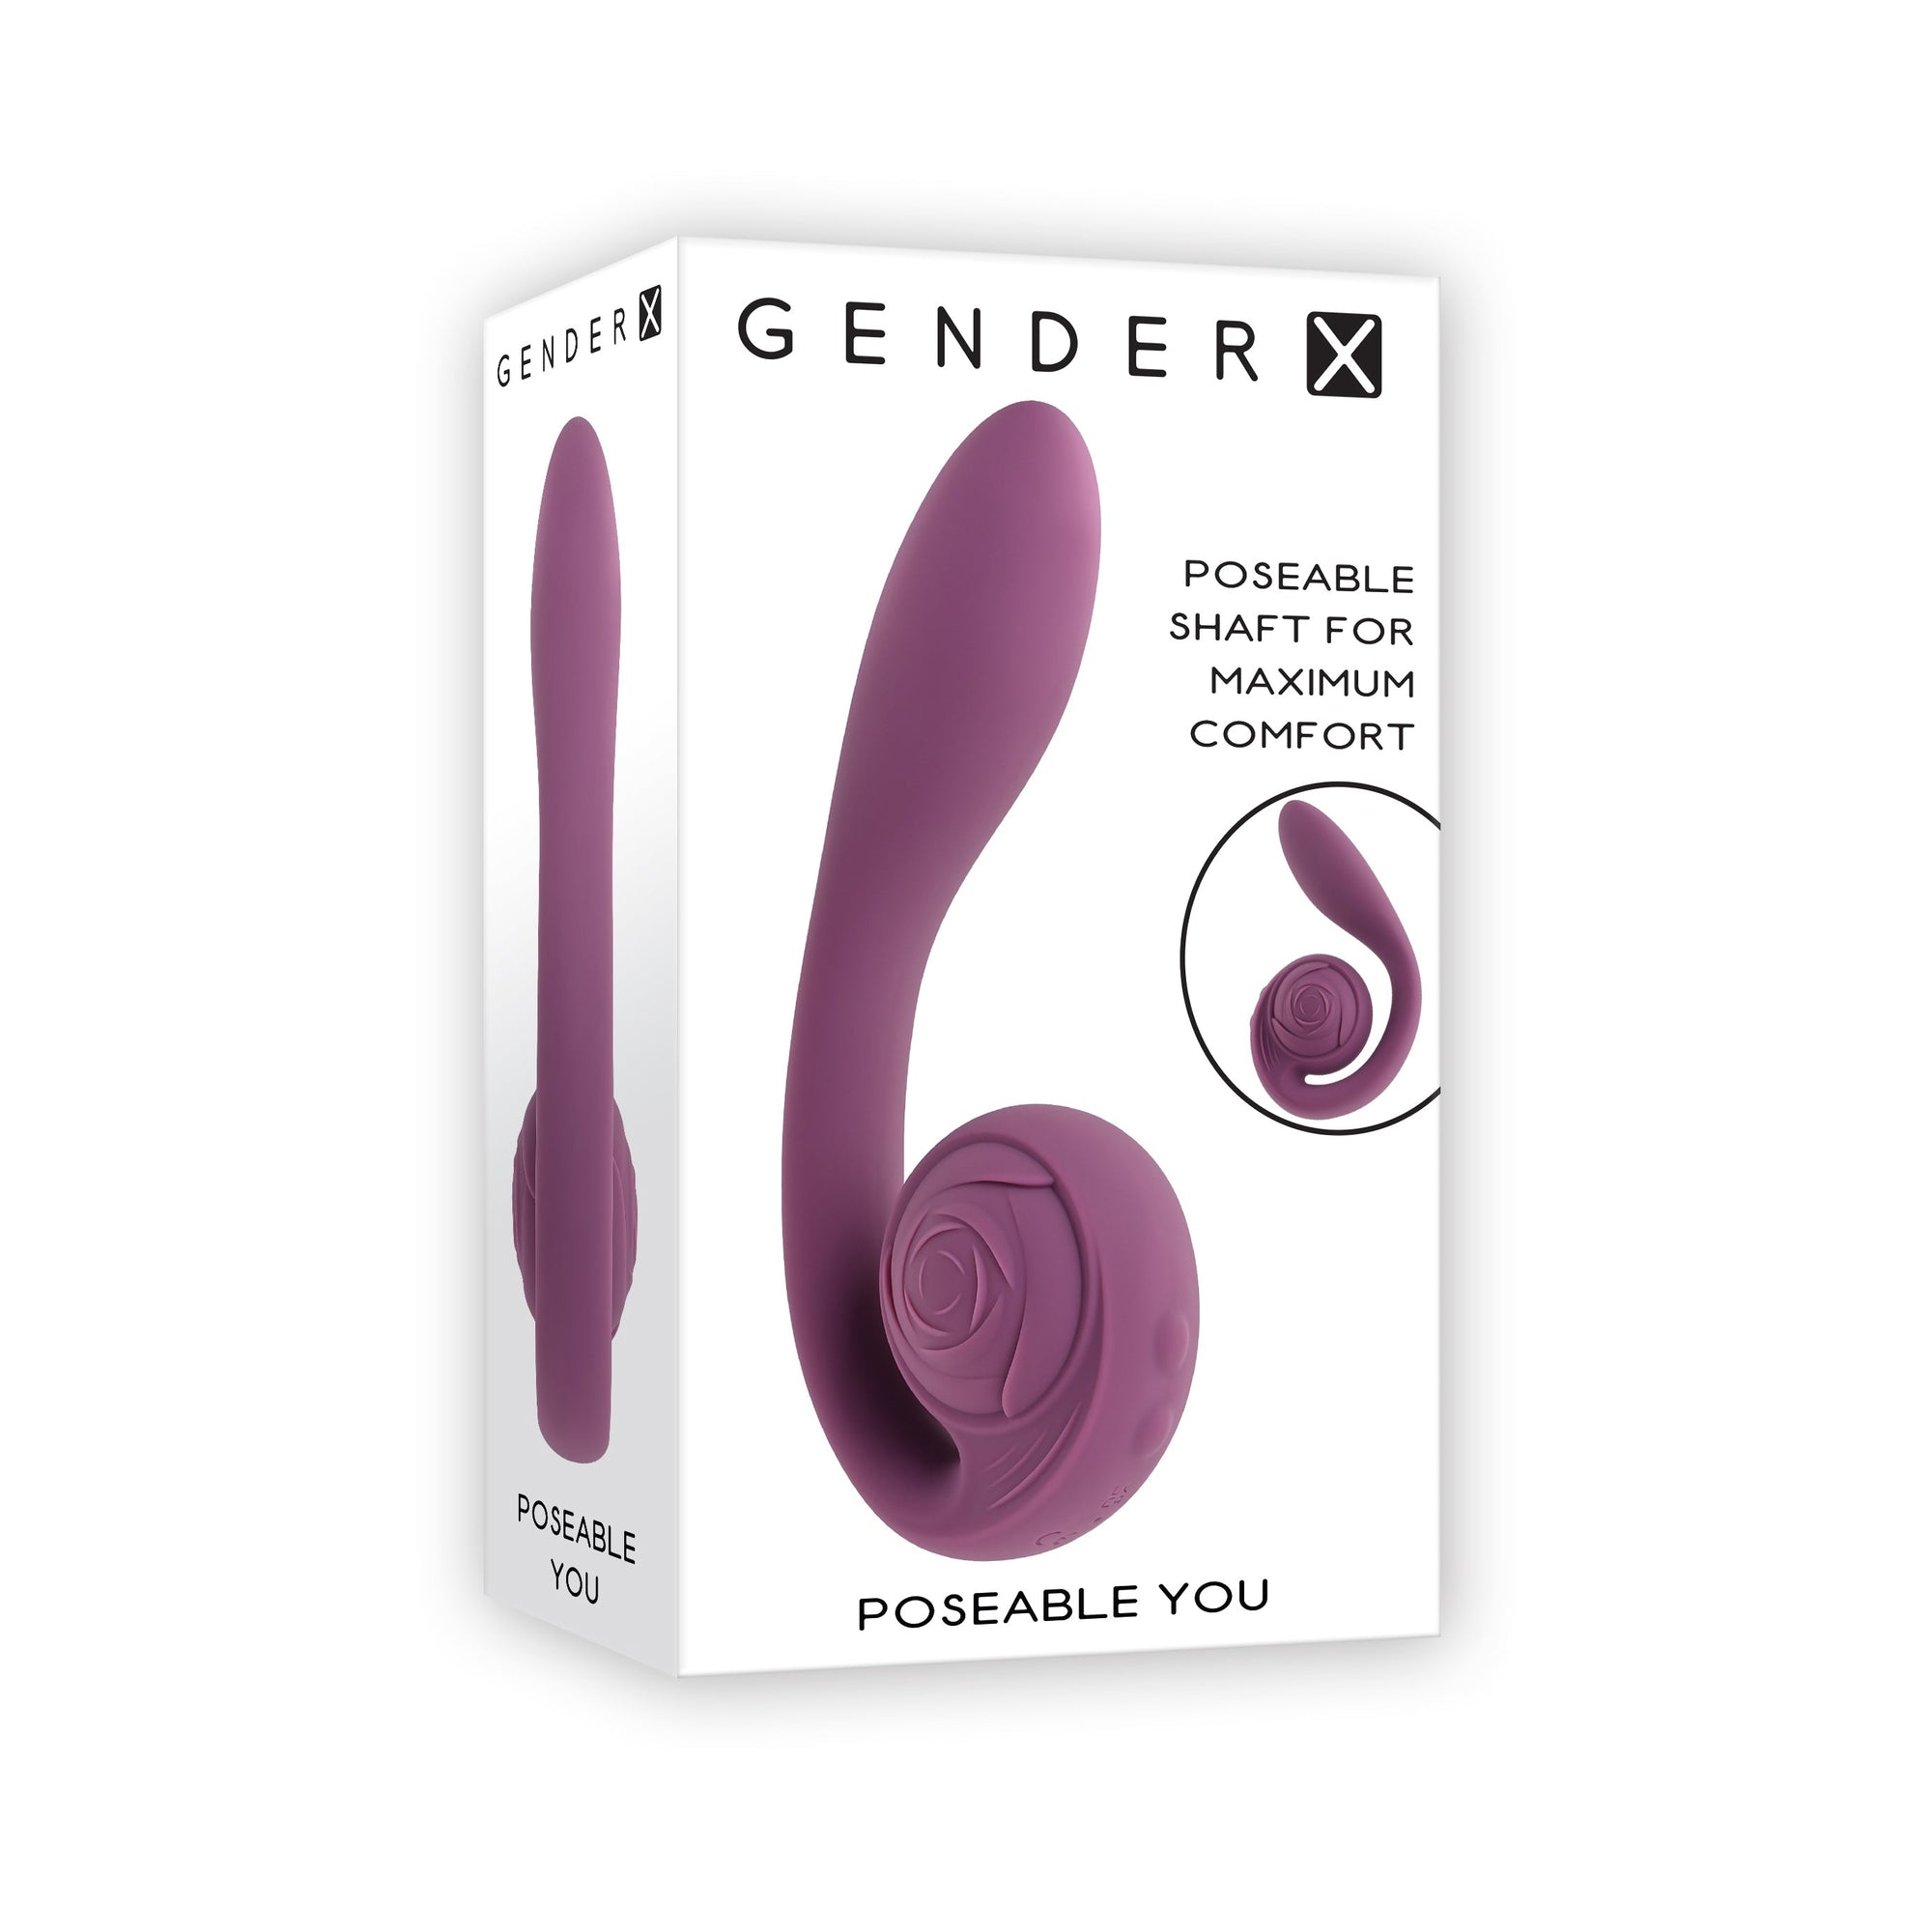 Evolved - Gender X Poseable You Flexible Vibrator (Purple)